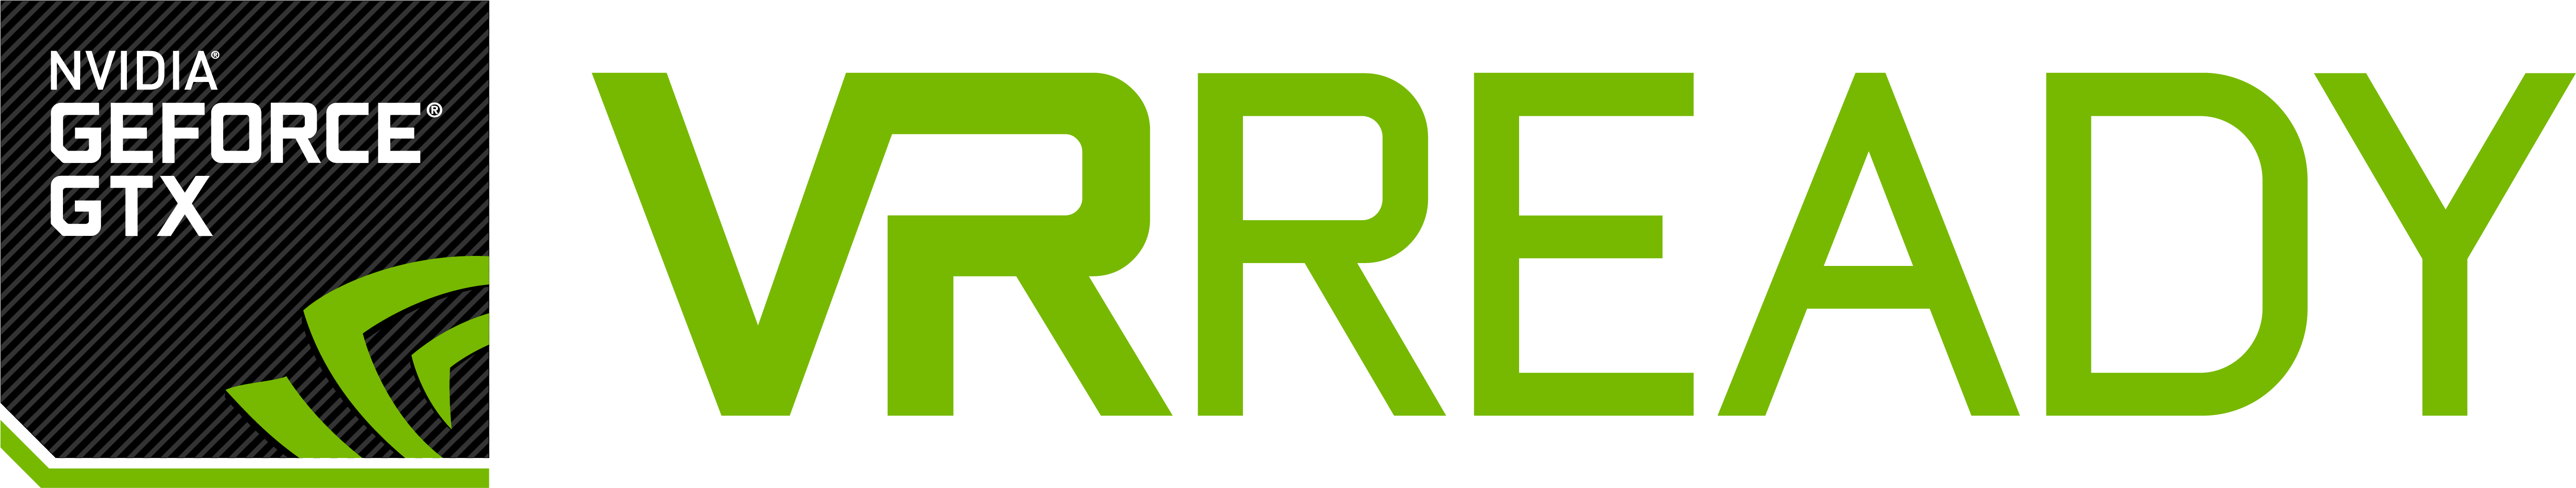 Vr Ready Logo - Nvidia Vr Ready Logo Clipart (5651x1274), Png Download